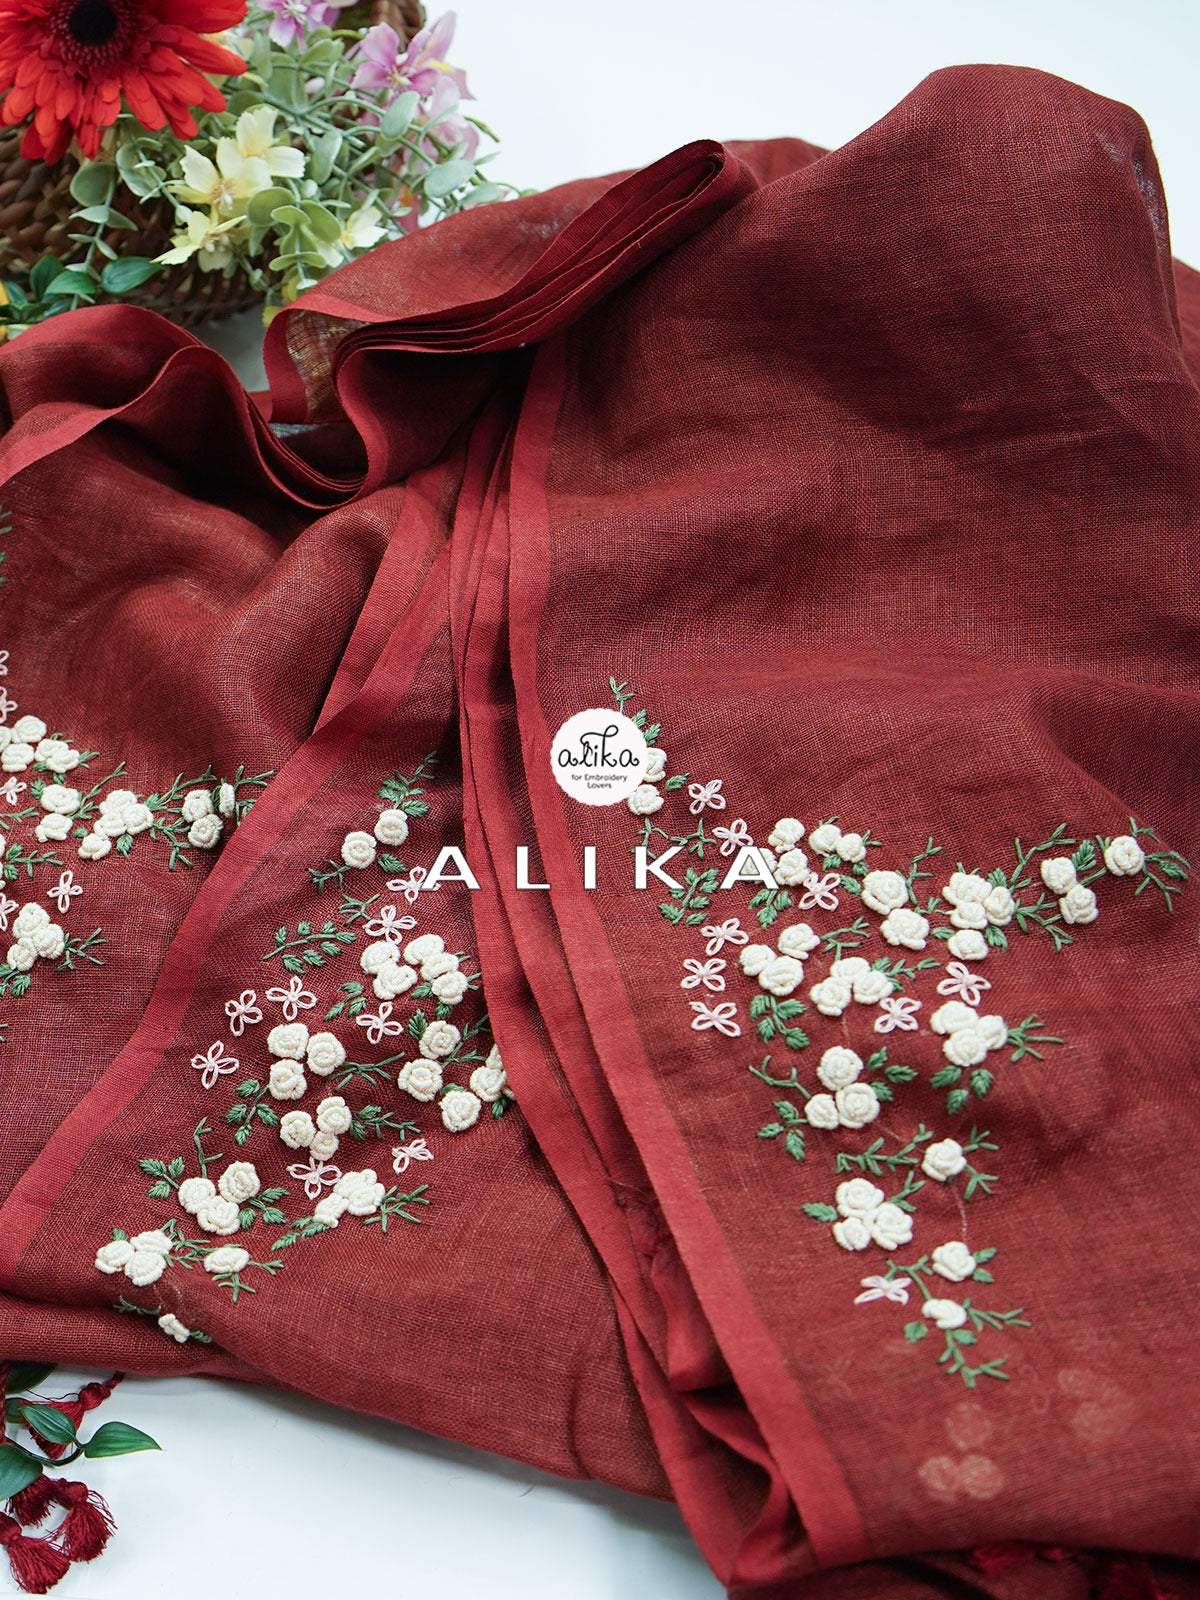 Regal Bloom: The Maroon Linen Saree with Exquisite Bullion Florals